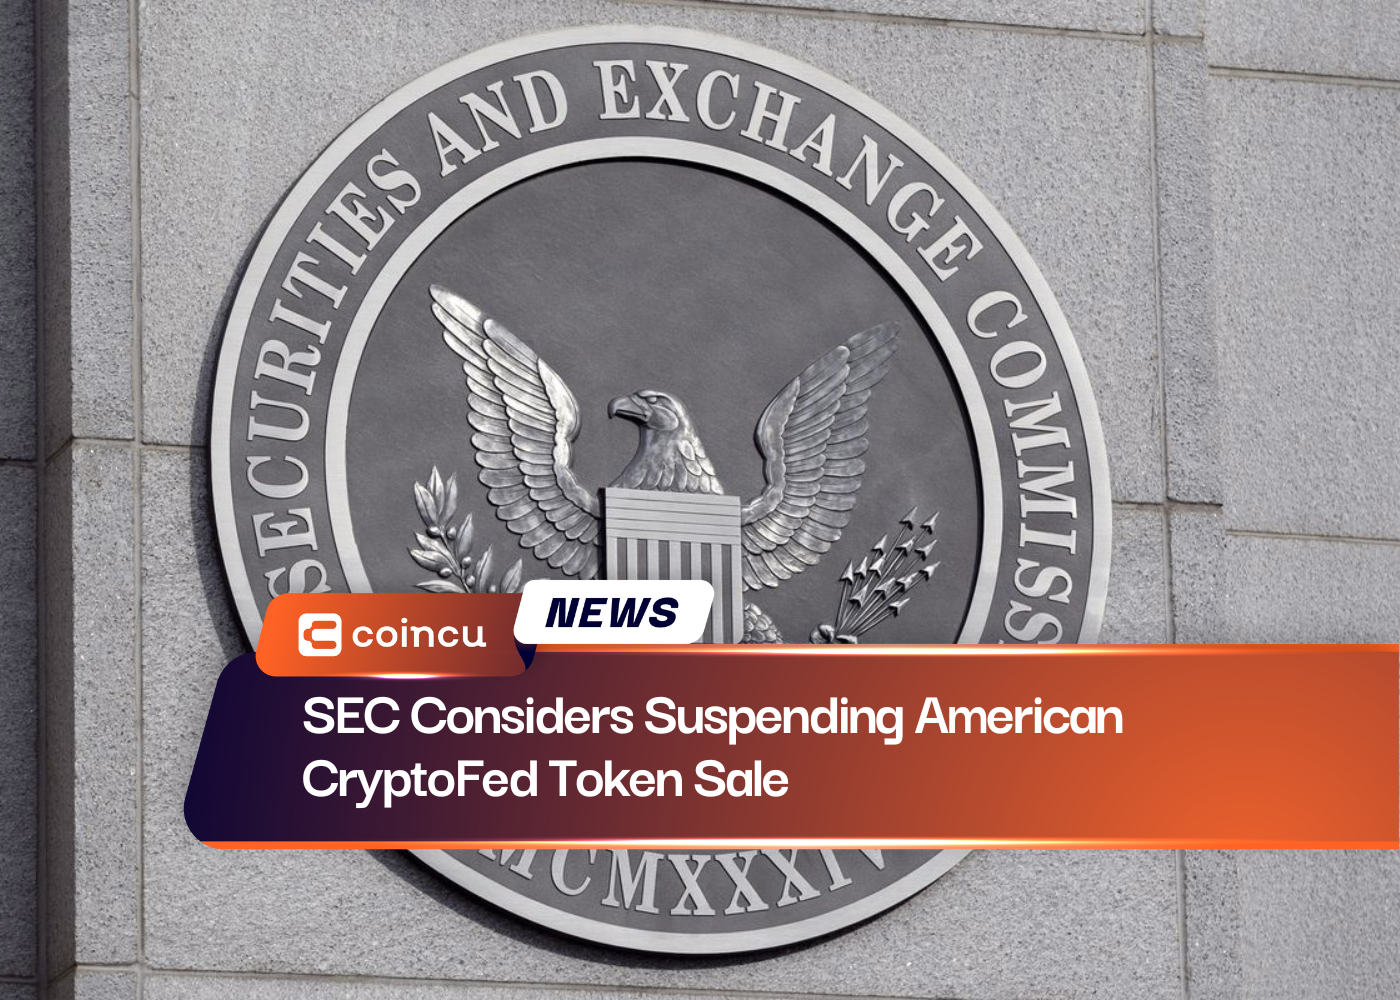 SEC Considers Suspending American CryptoFed Token Sale